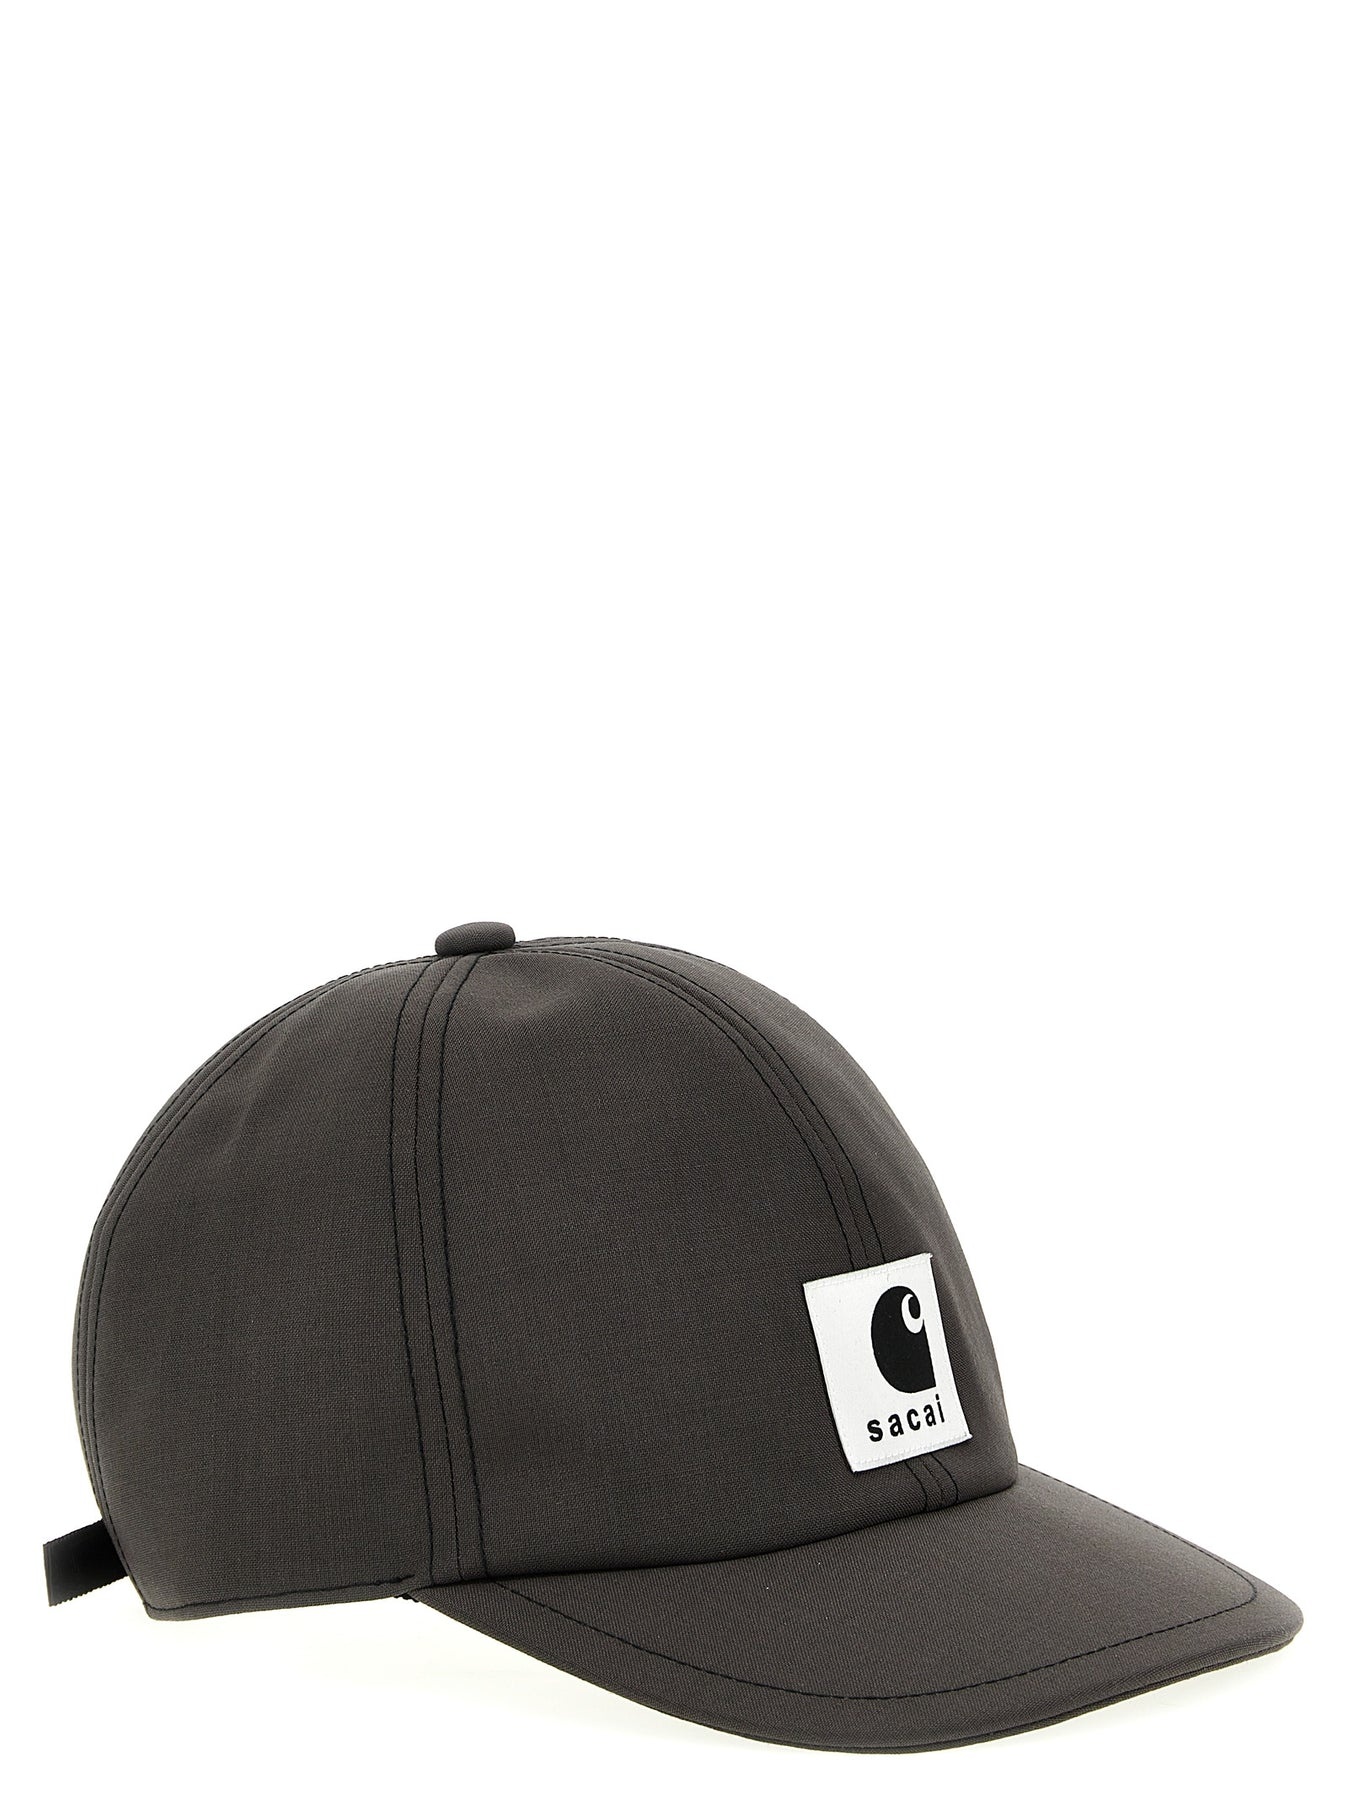 Sacai X Carhartt Wip Cap Hats Gray - 2